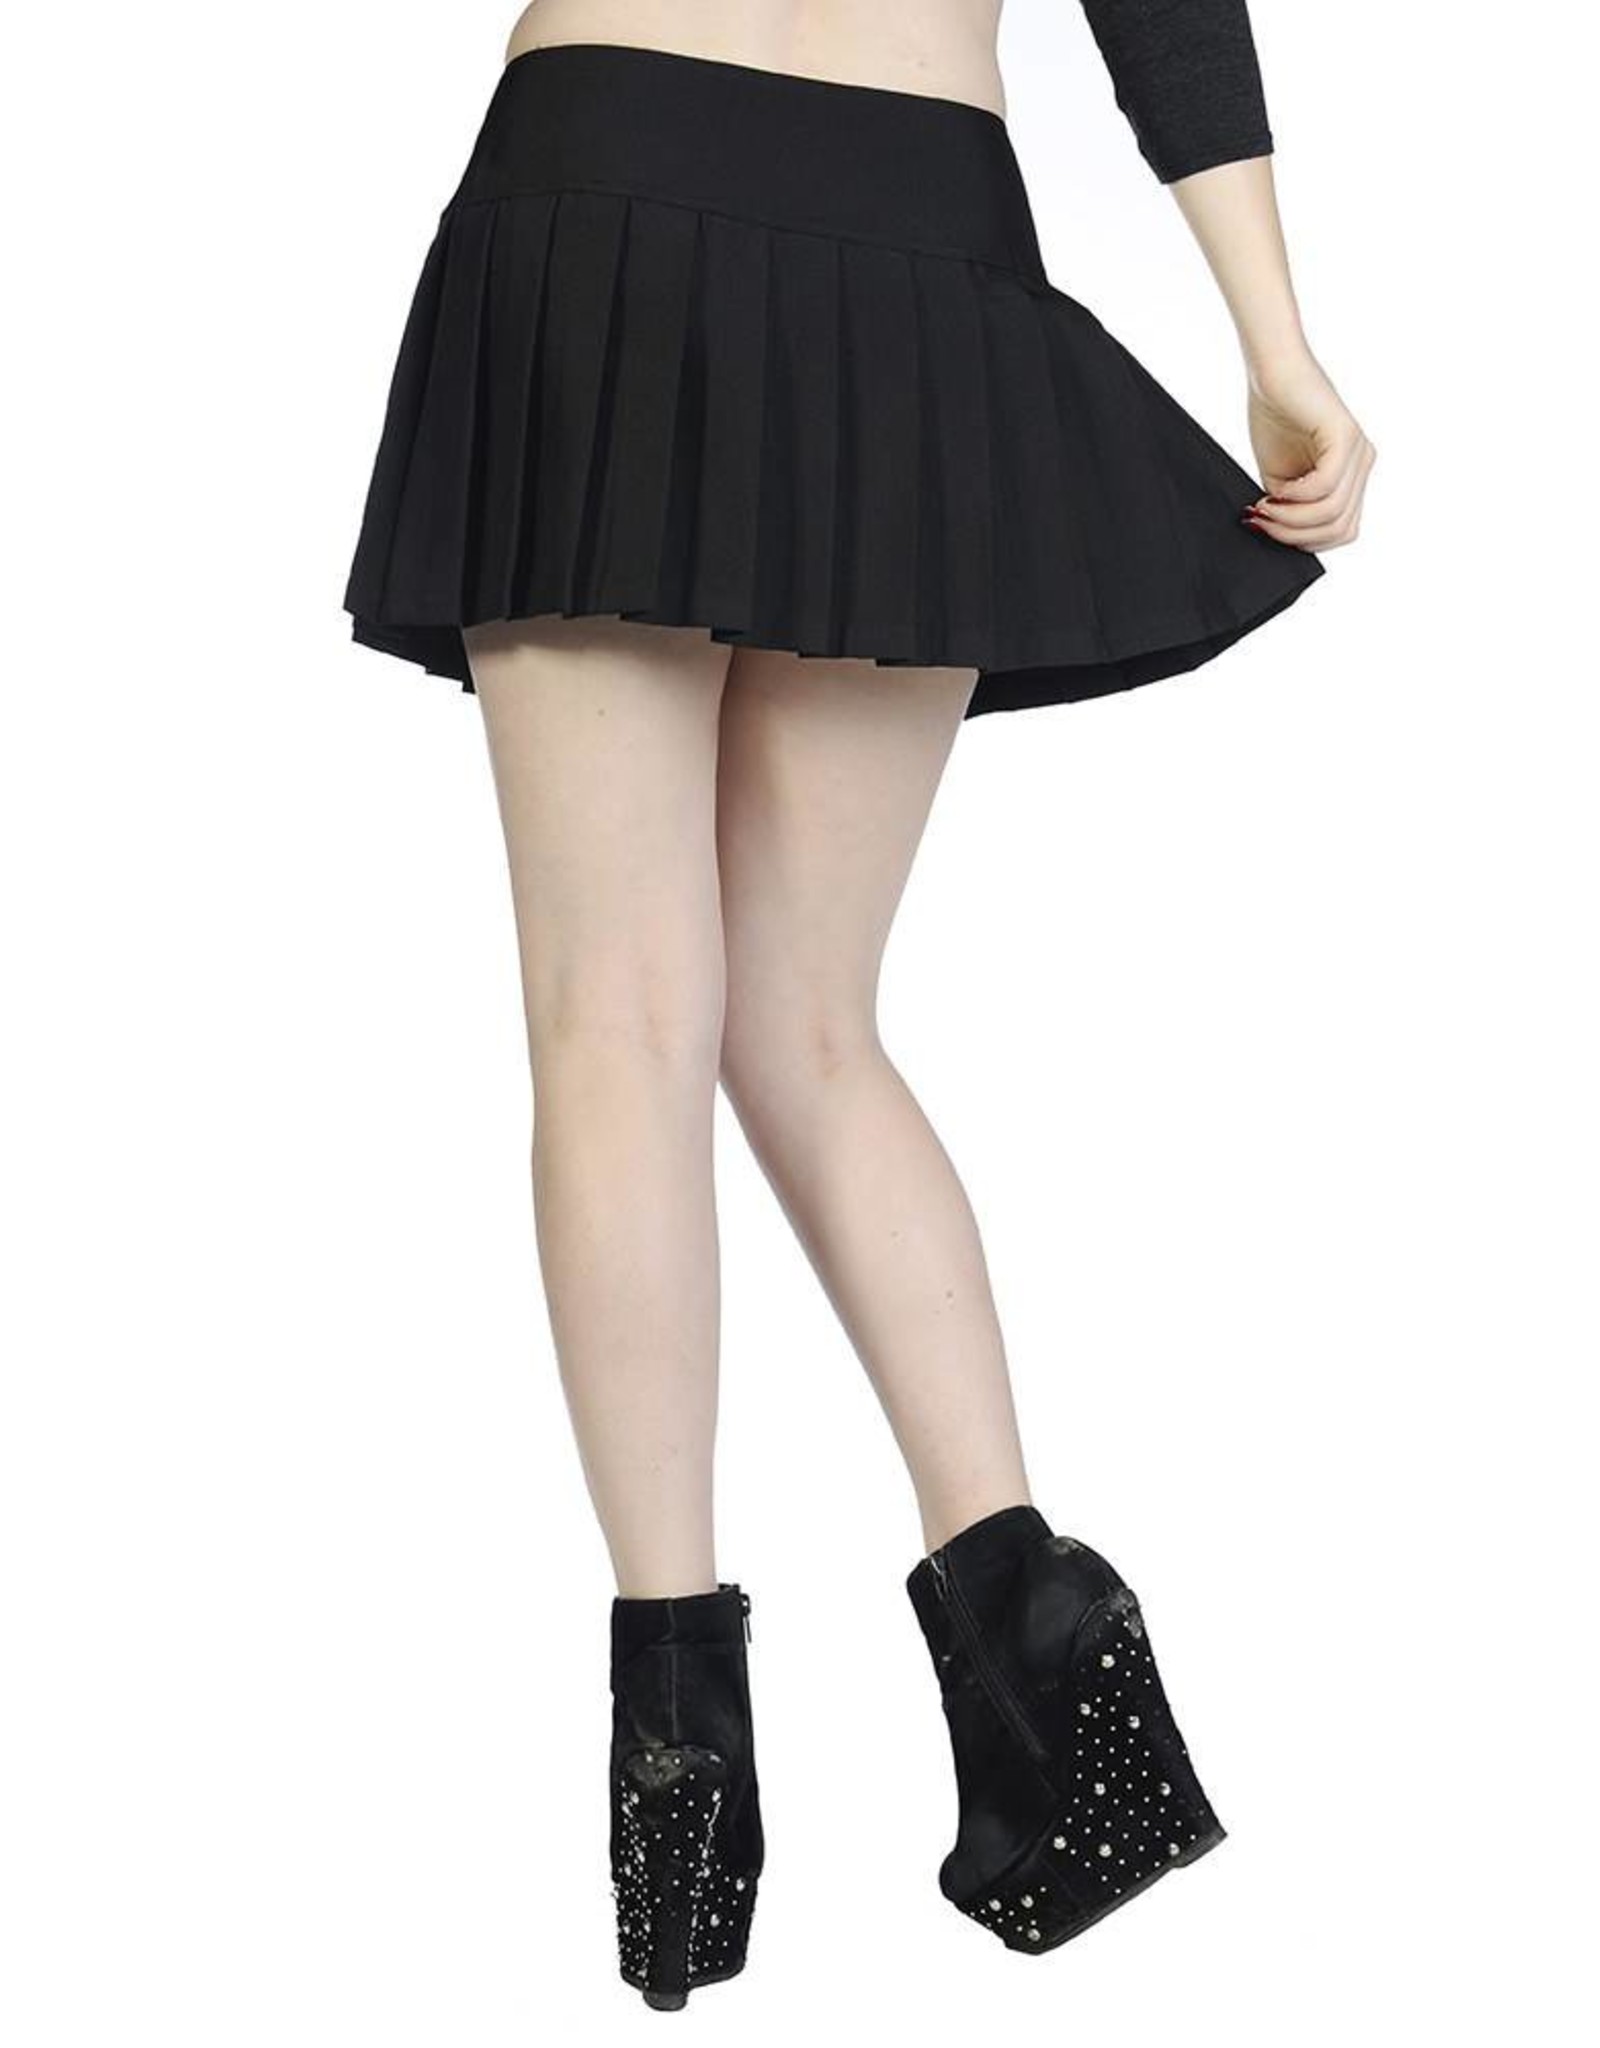 BANNED - Plain Black Mini Skirt - Boutique X20 MTL